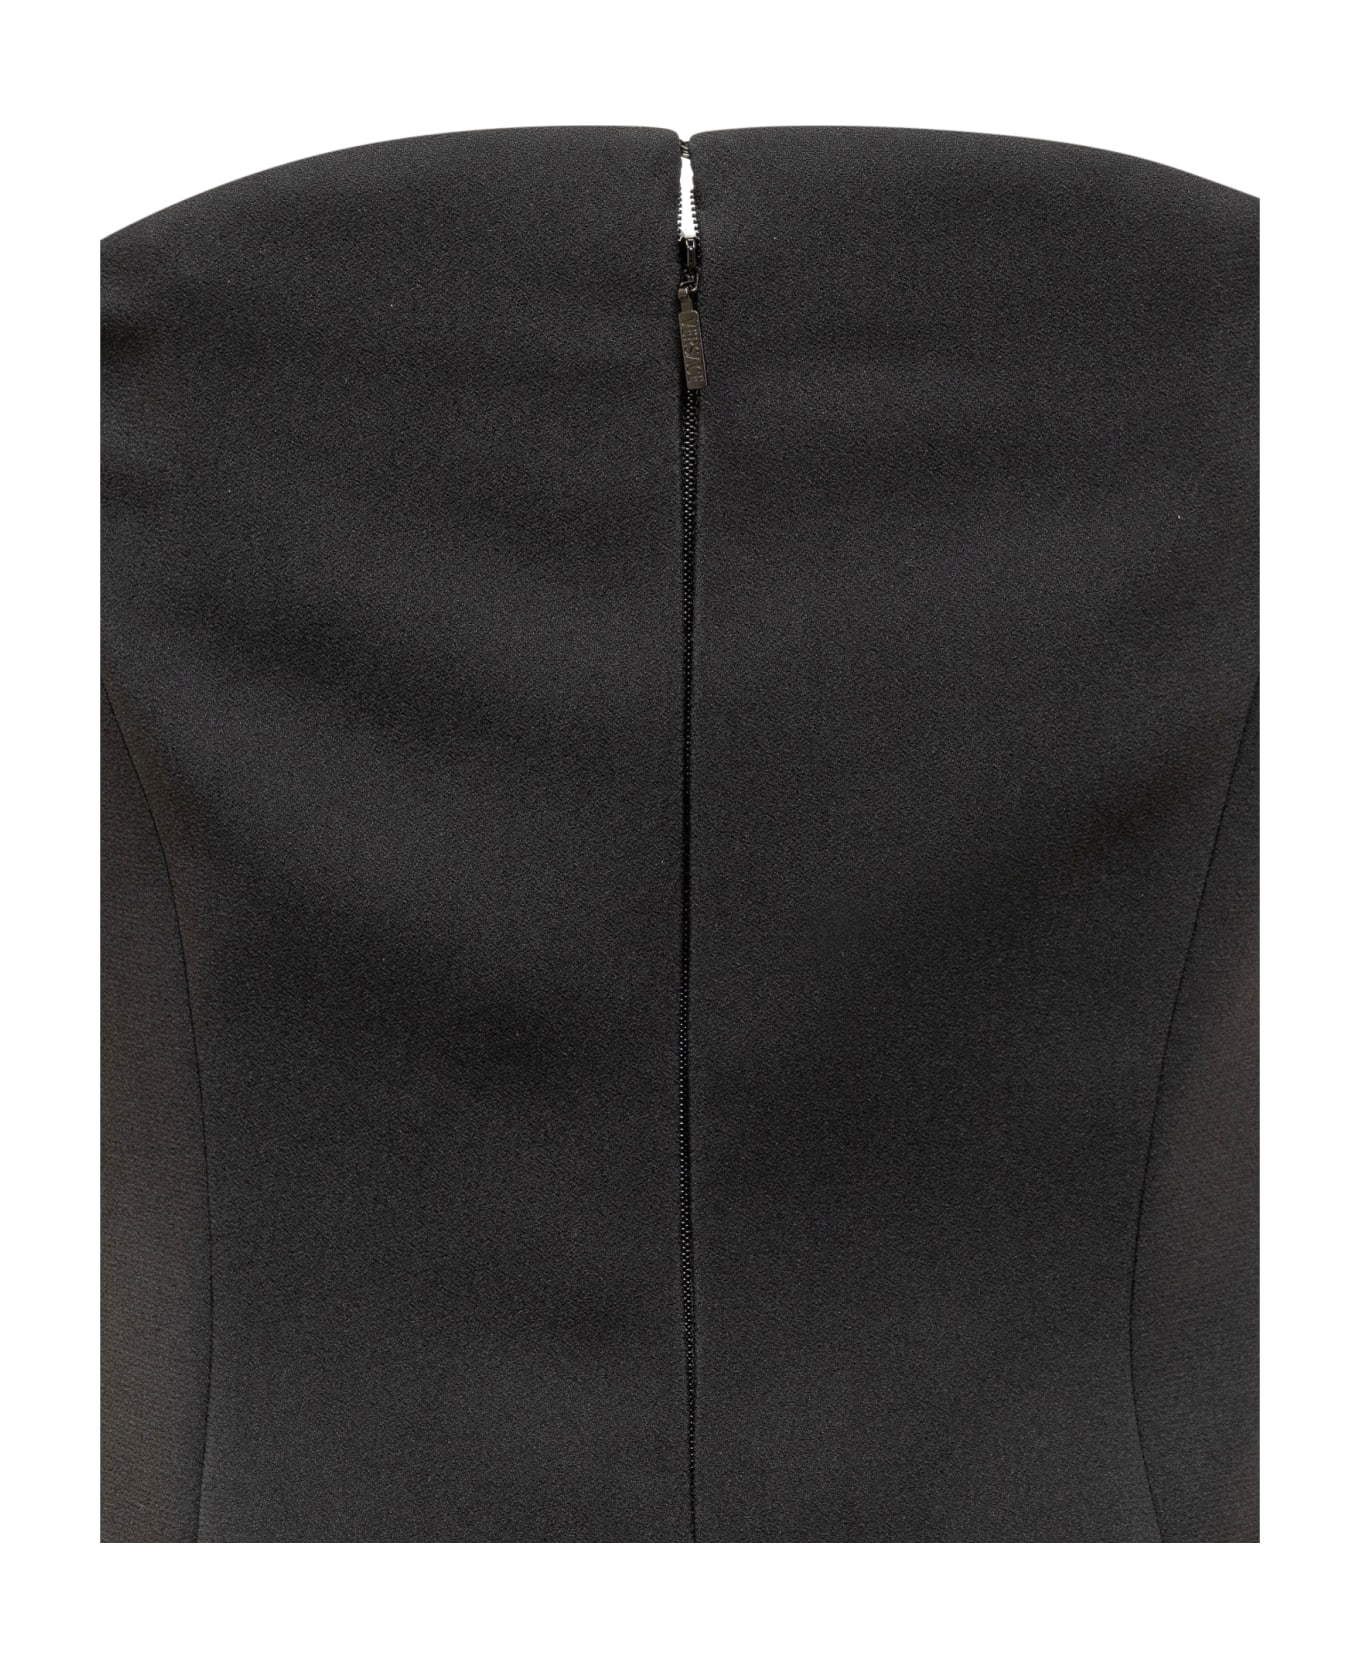 Versace Satin Envers Dress - Black